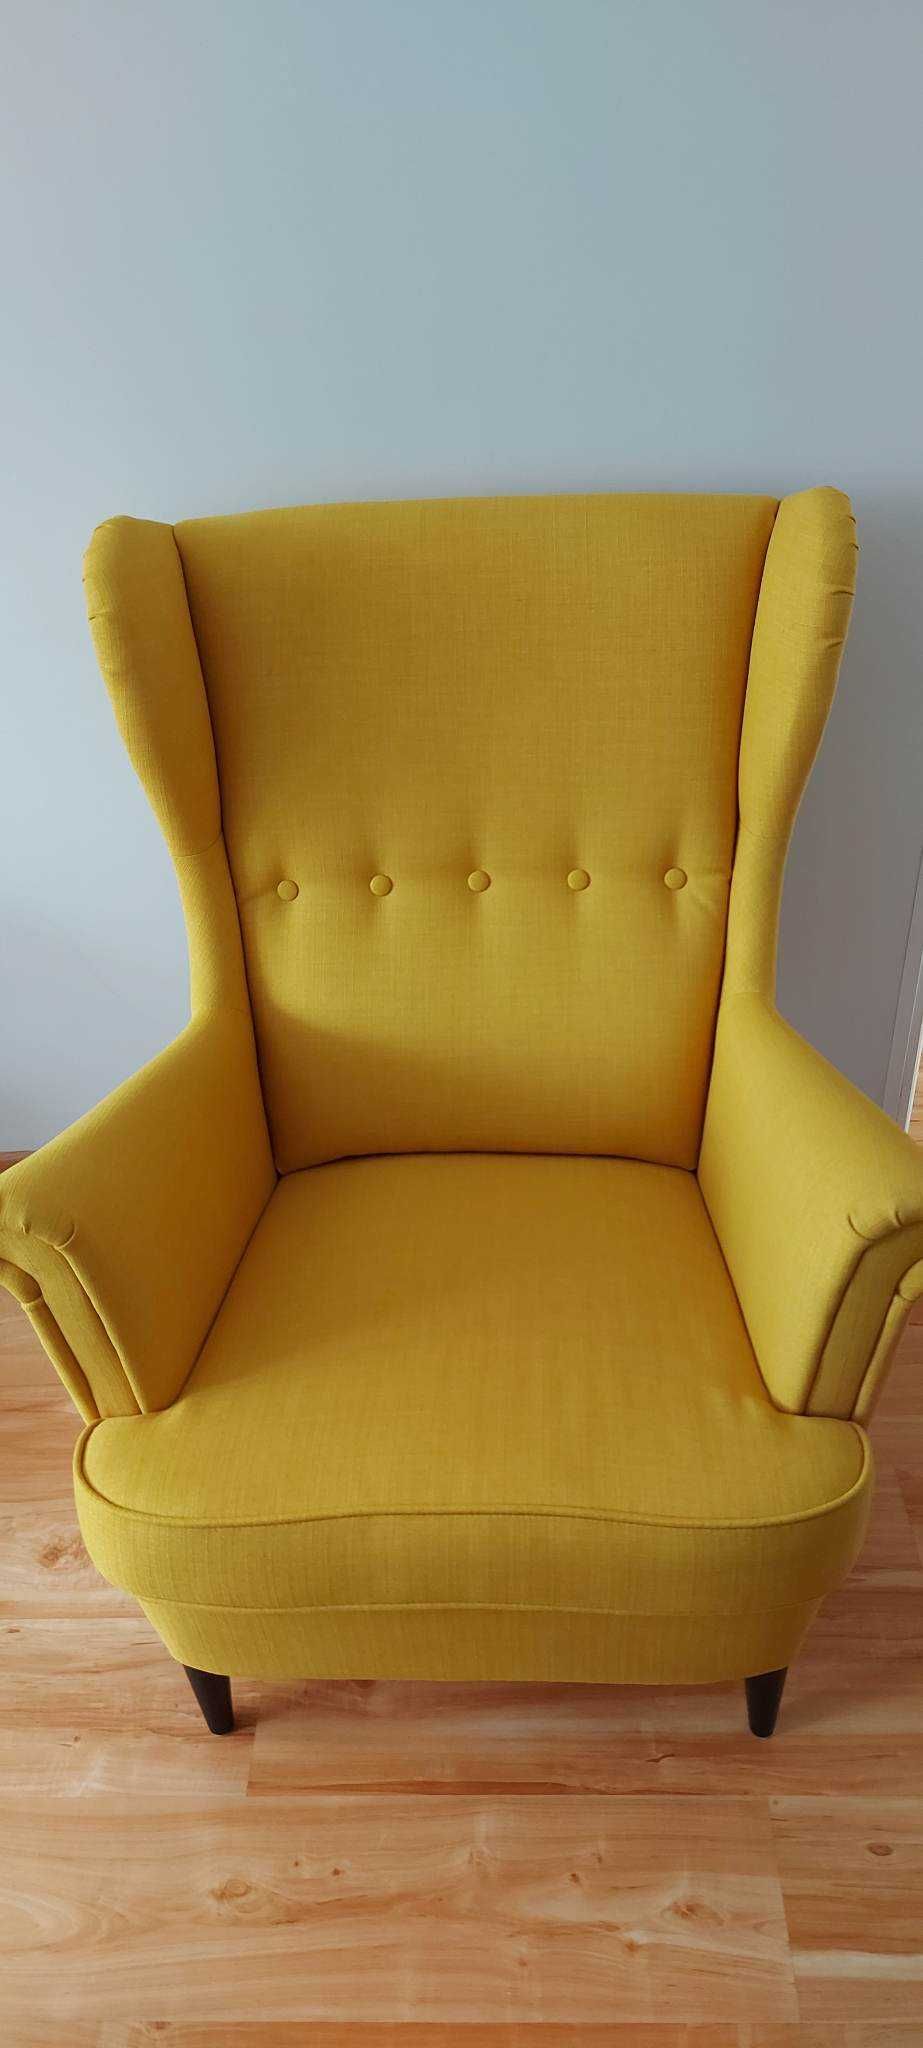 Fotel uszak kolor żółty jak nowy